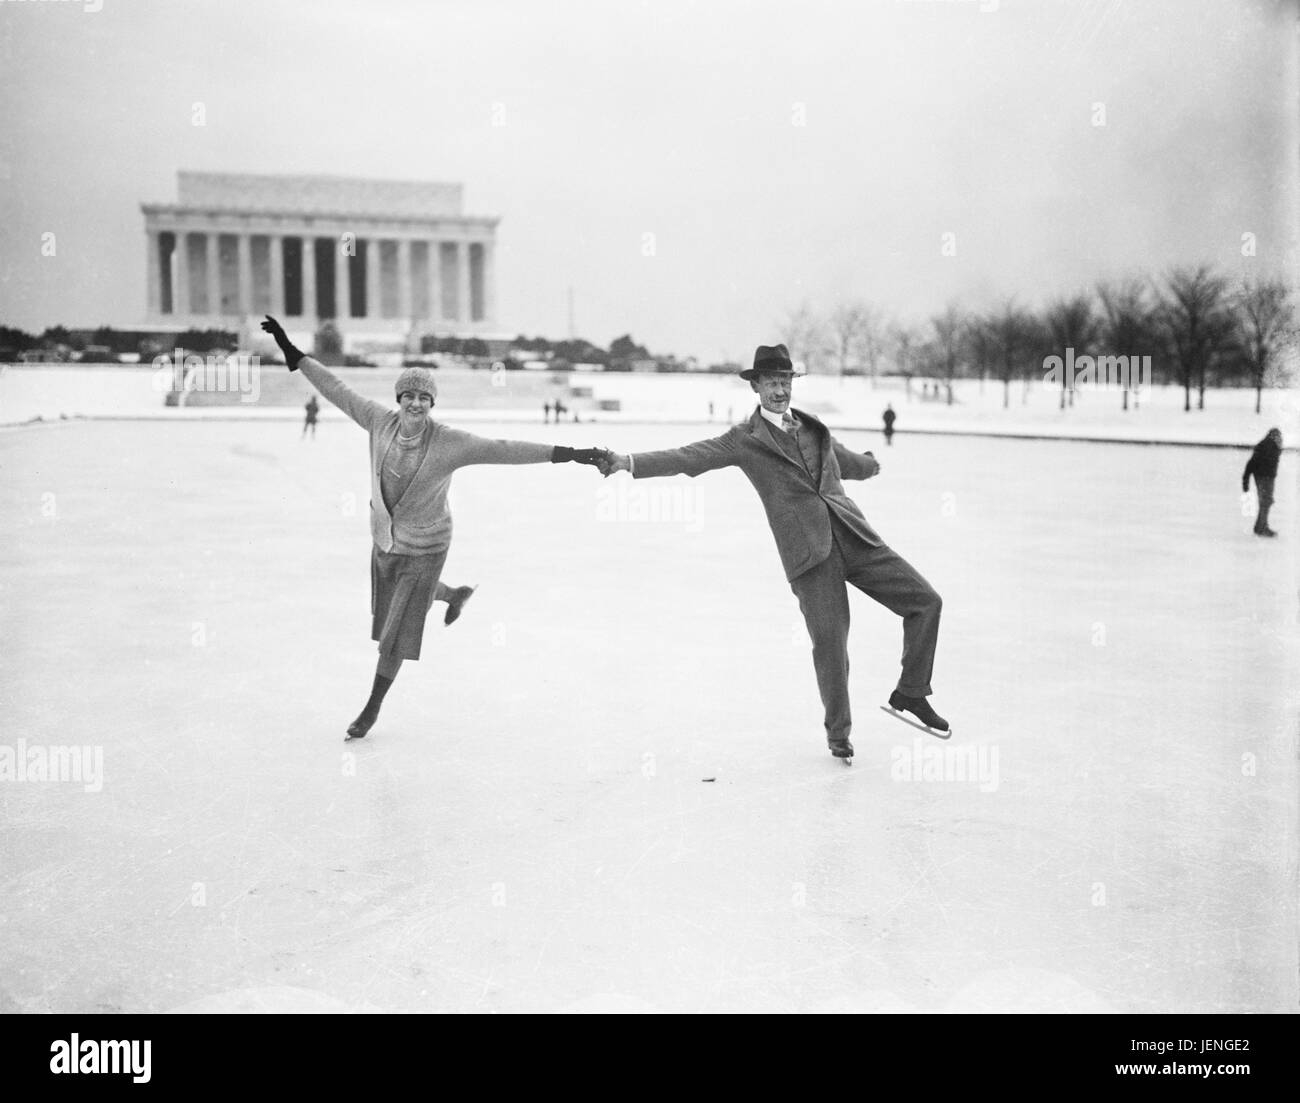 Couple Ice Skating at Tidal Basin, Washington DC, USA, Harris & Ewing, January 1930 Stock Photo